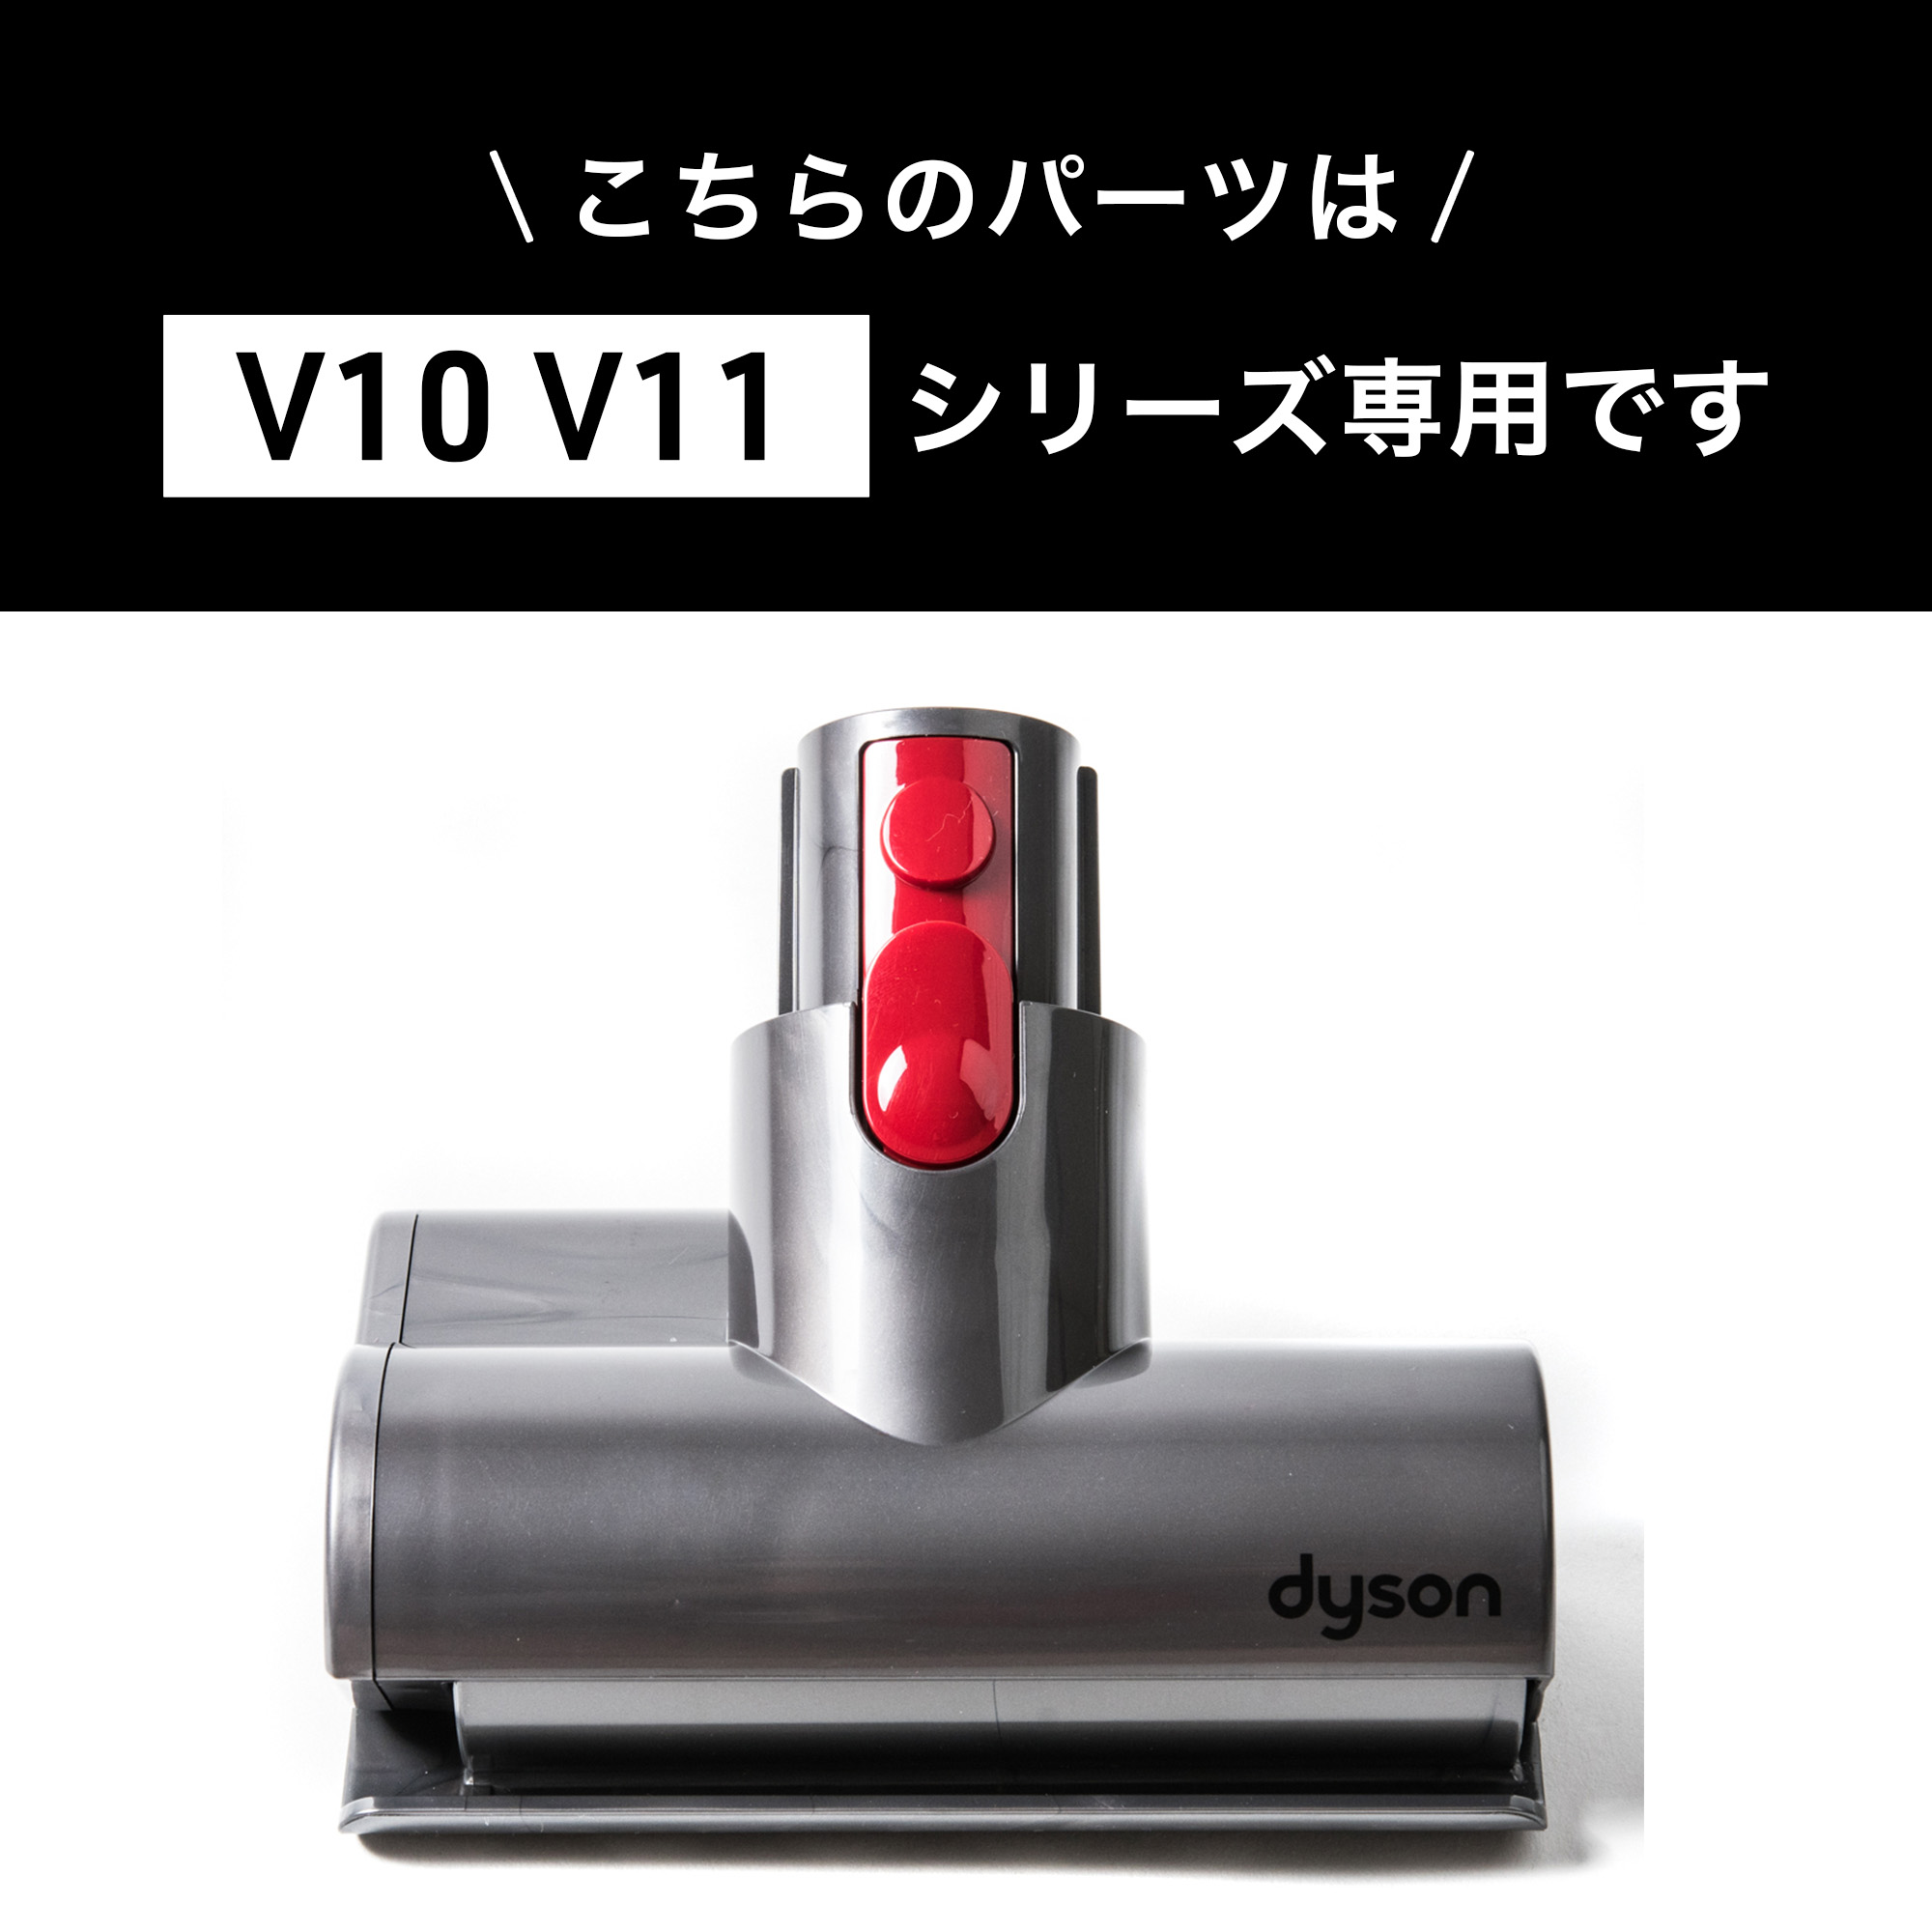 Dyson ダイソン 掃除機 純正 パーツ 返品OK ミニモーターヘッド V10 V11 適合 SV12 SV14 モデル 部品 交換 : d364  : Bloom - 通販 - Yahoo!ショッピング